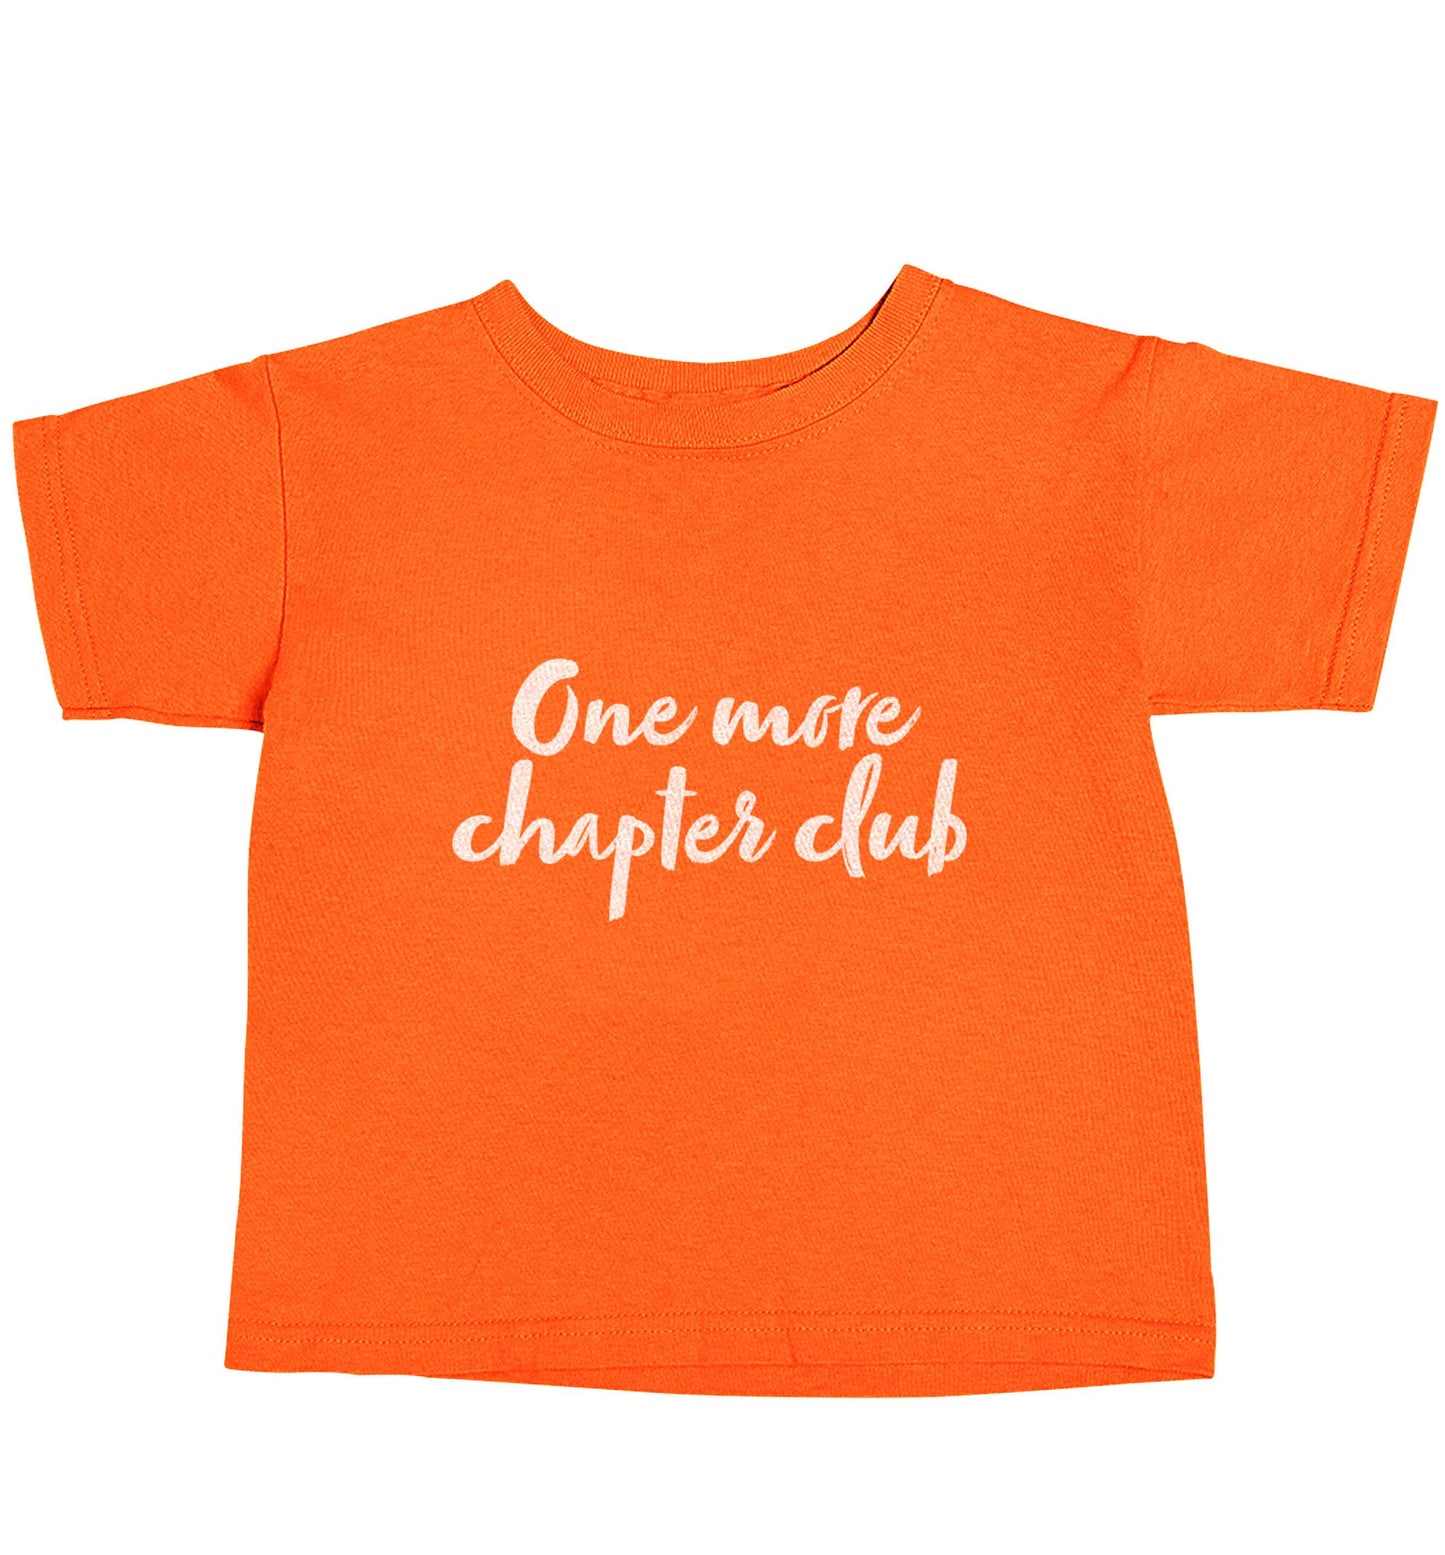 One more chapter club Kit orange baby toddler Tshirt 2 Years